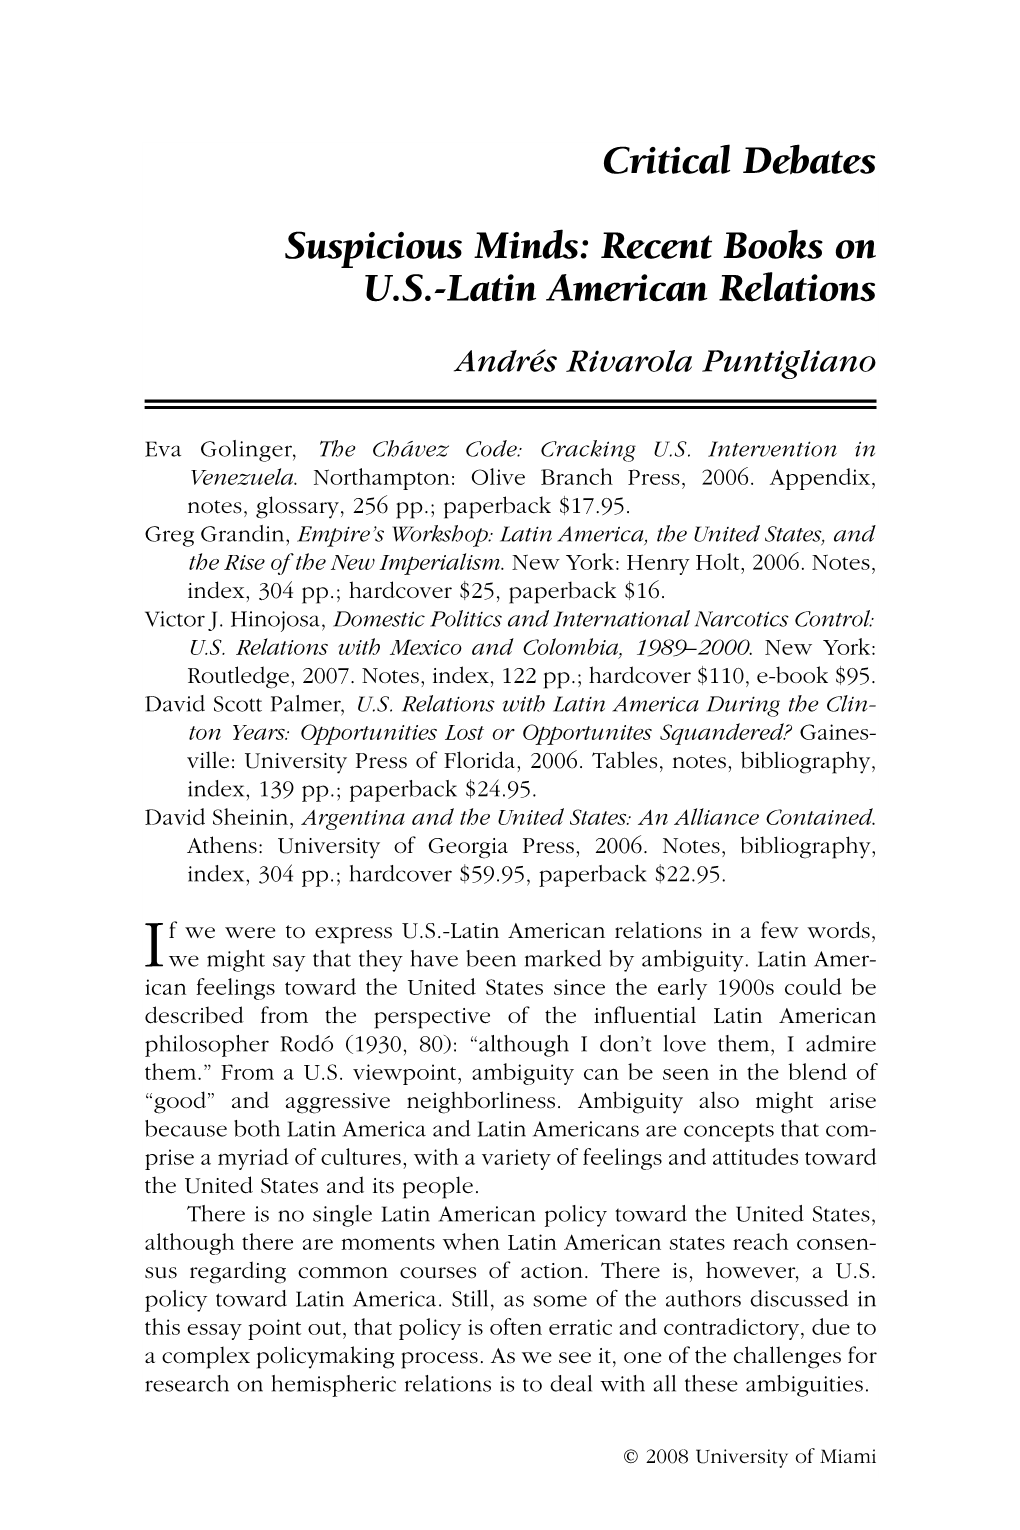 Suspicious Minds: Recent Books on U.S.-Latin American Relations